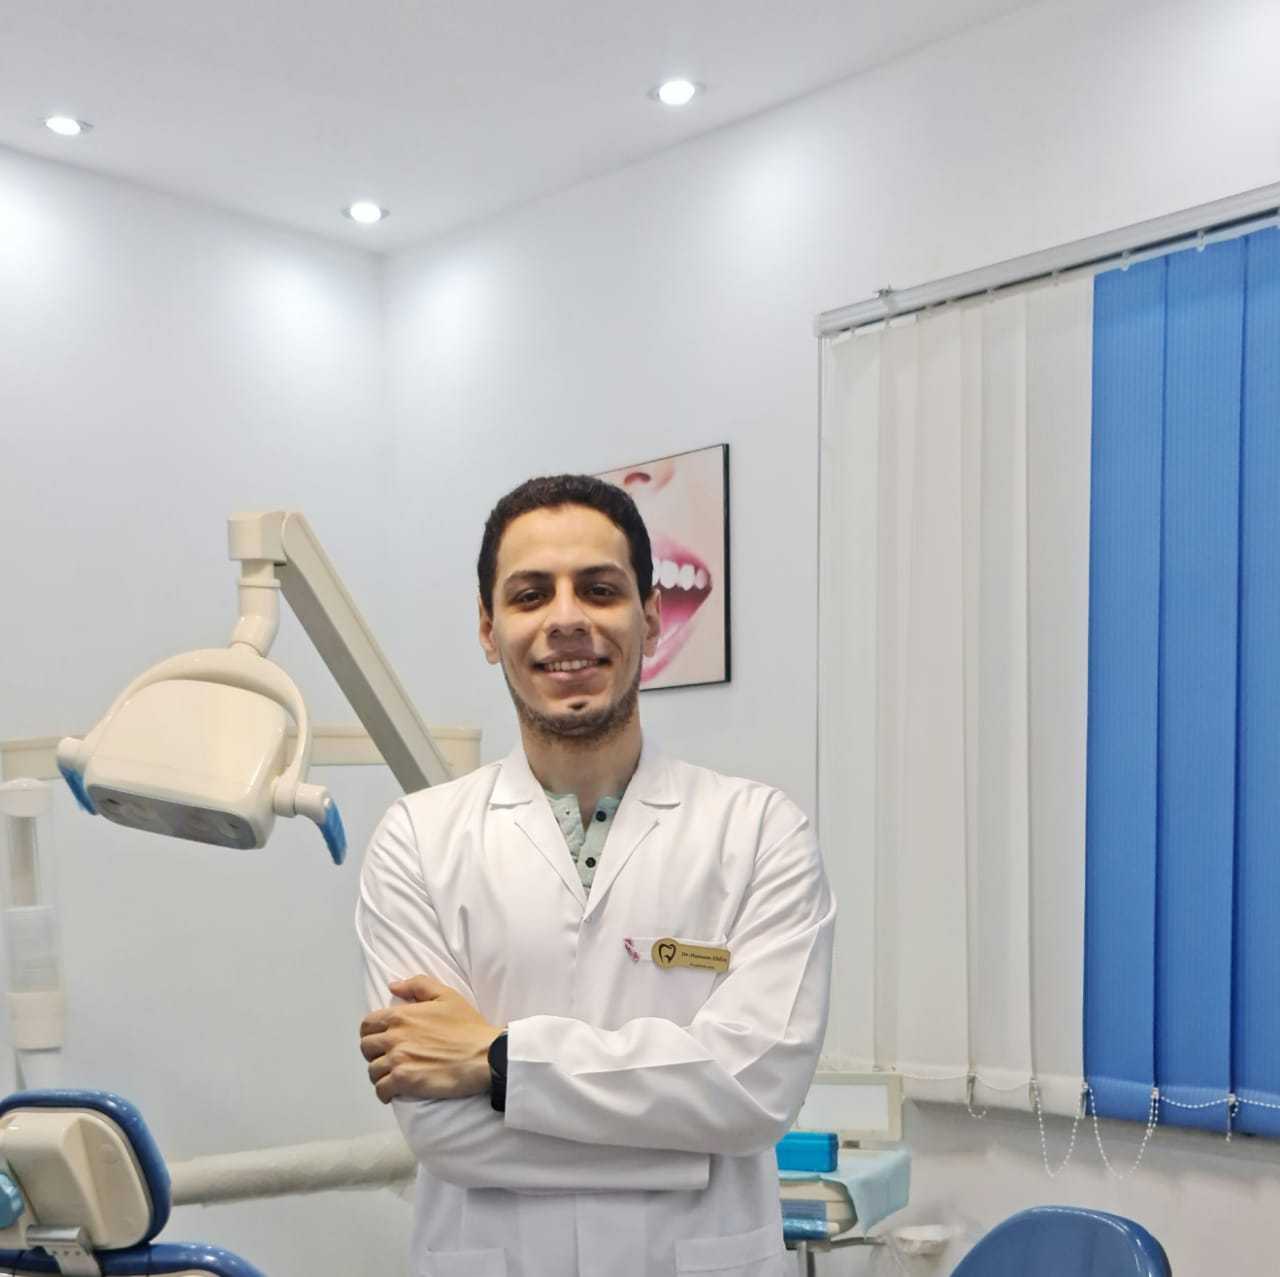 Dr. Hossam El Din Hassan Abdel Razek, a specialist in oral and dental medicine